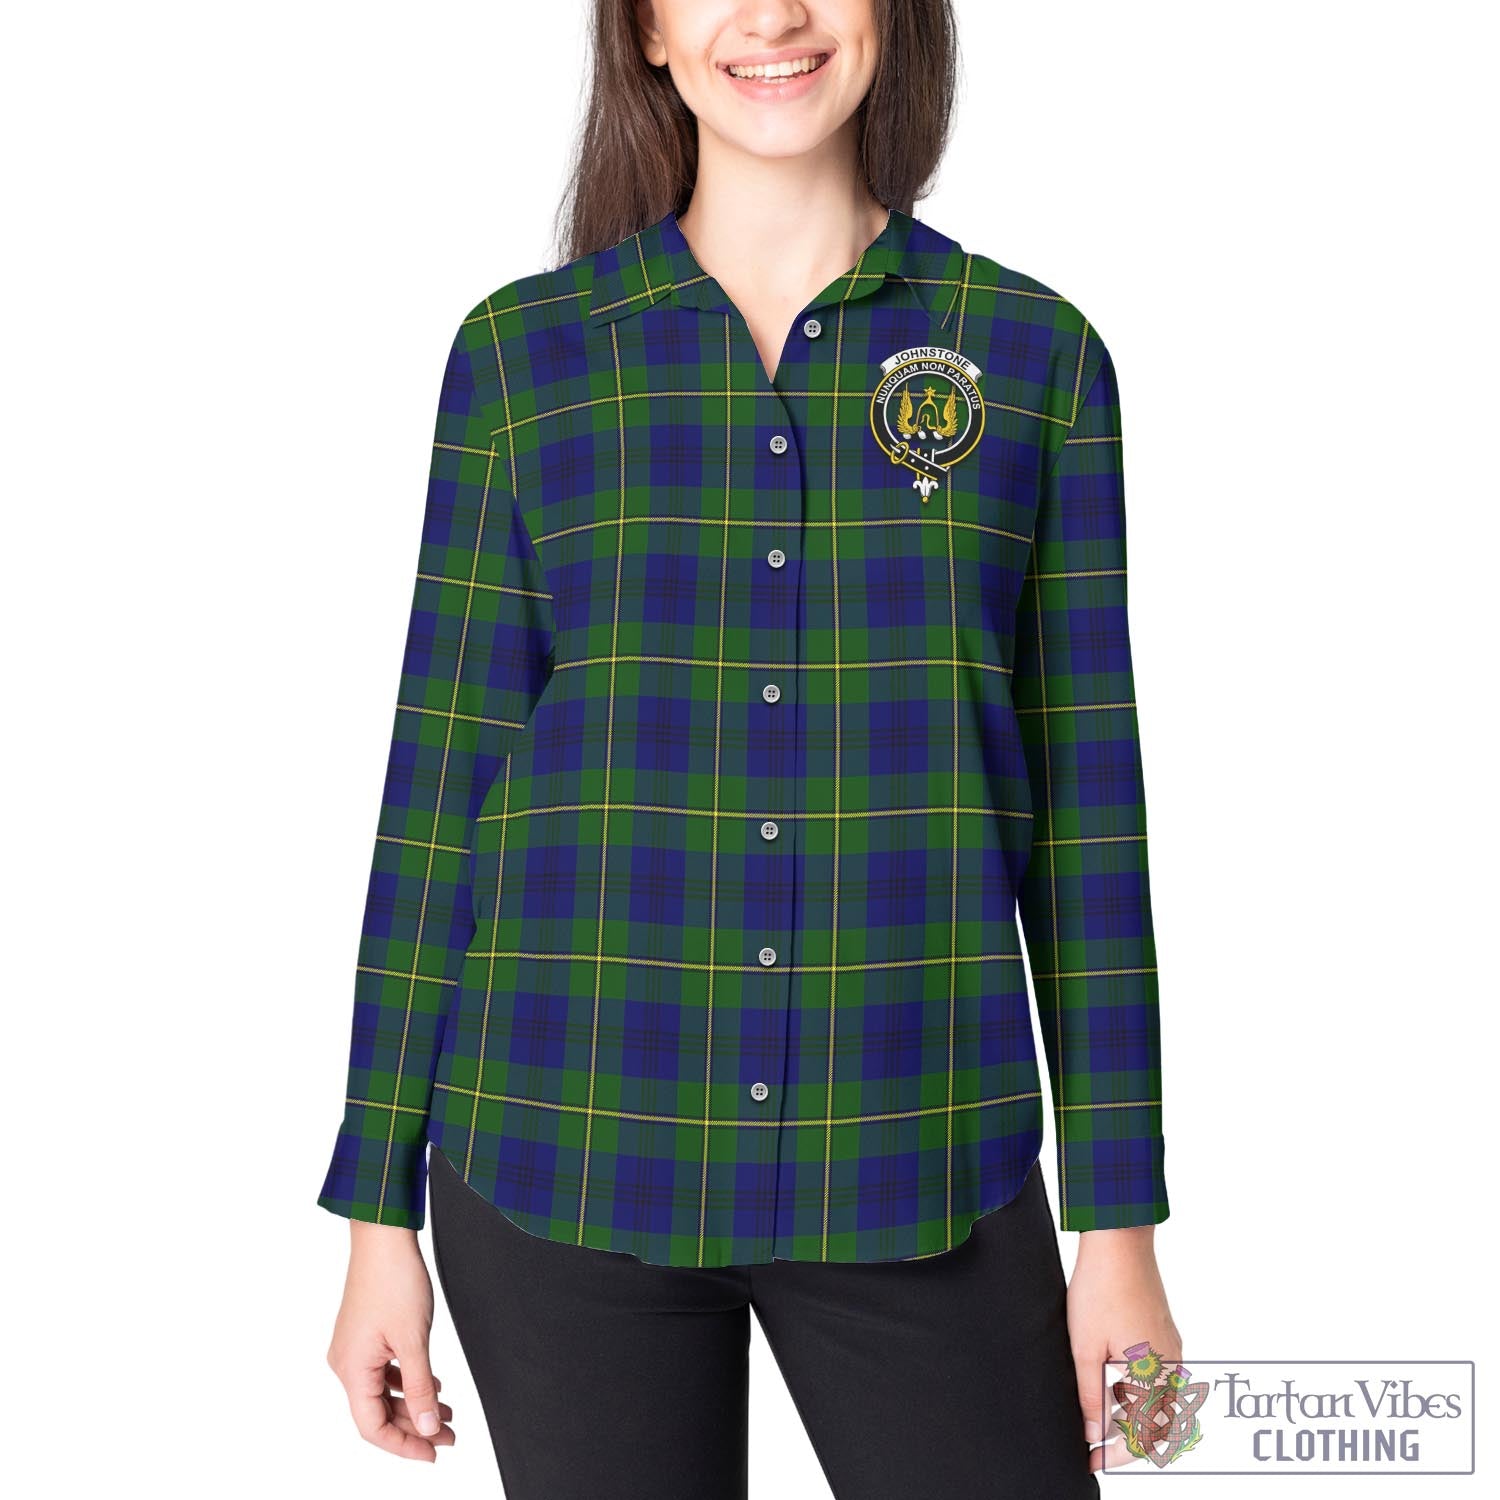 Tartan Vibes Clothing Johnstone-Johnston Modern Tartan Womens Casual Shirt with Family Crest